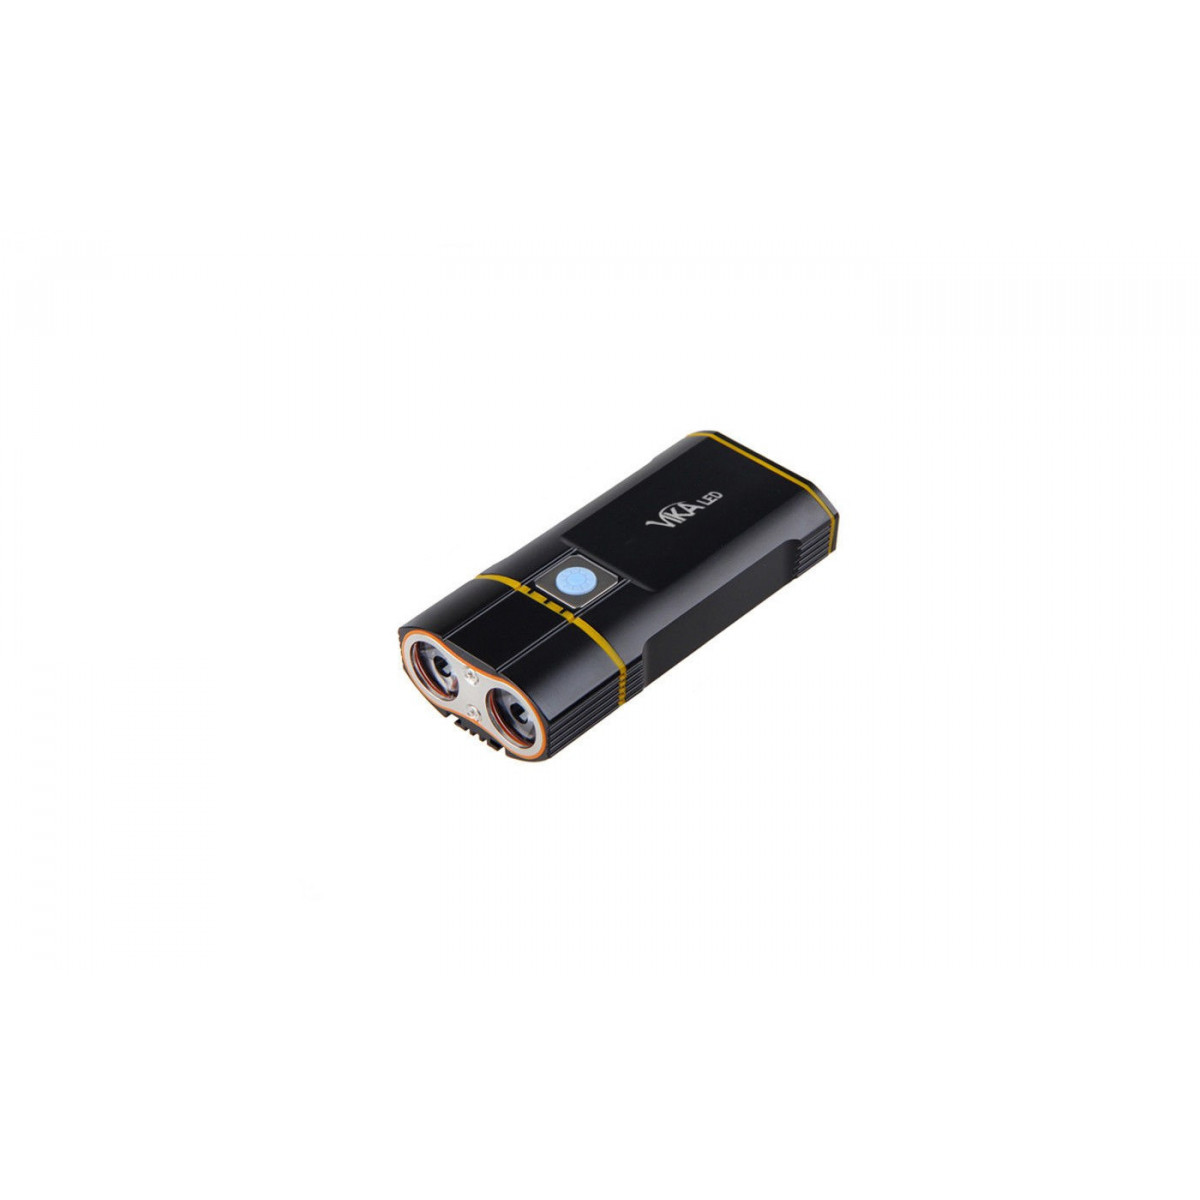 FOCO DELANTERO VIKA - LED V800 USB (800 LUMENS)